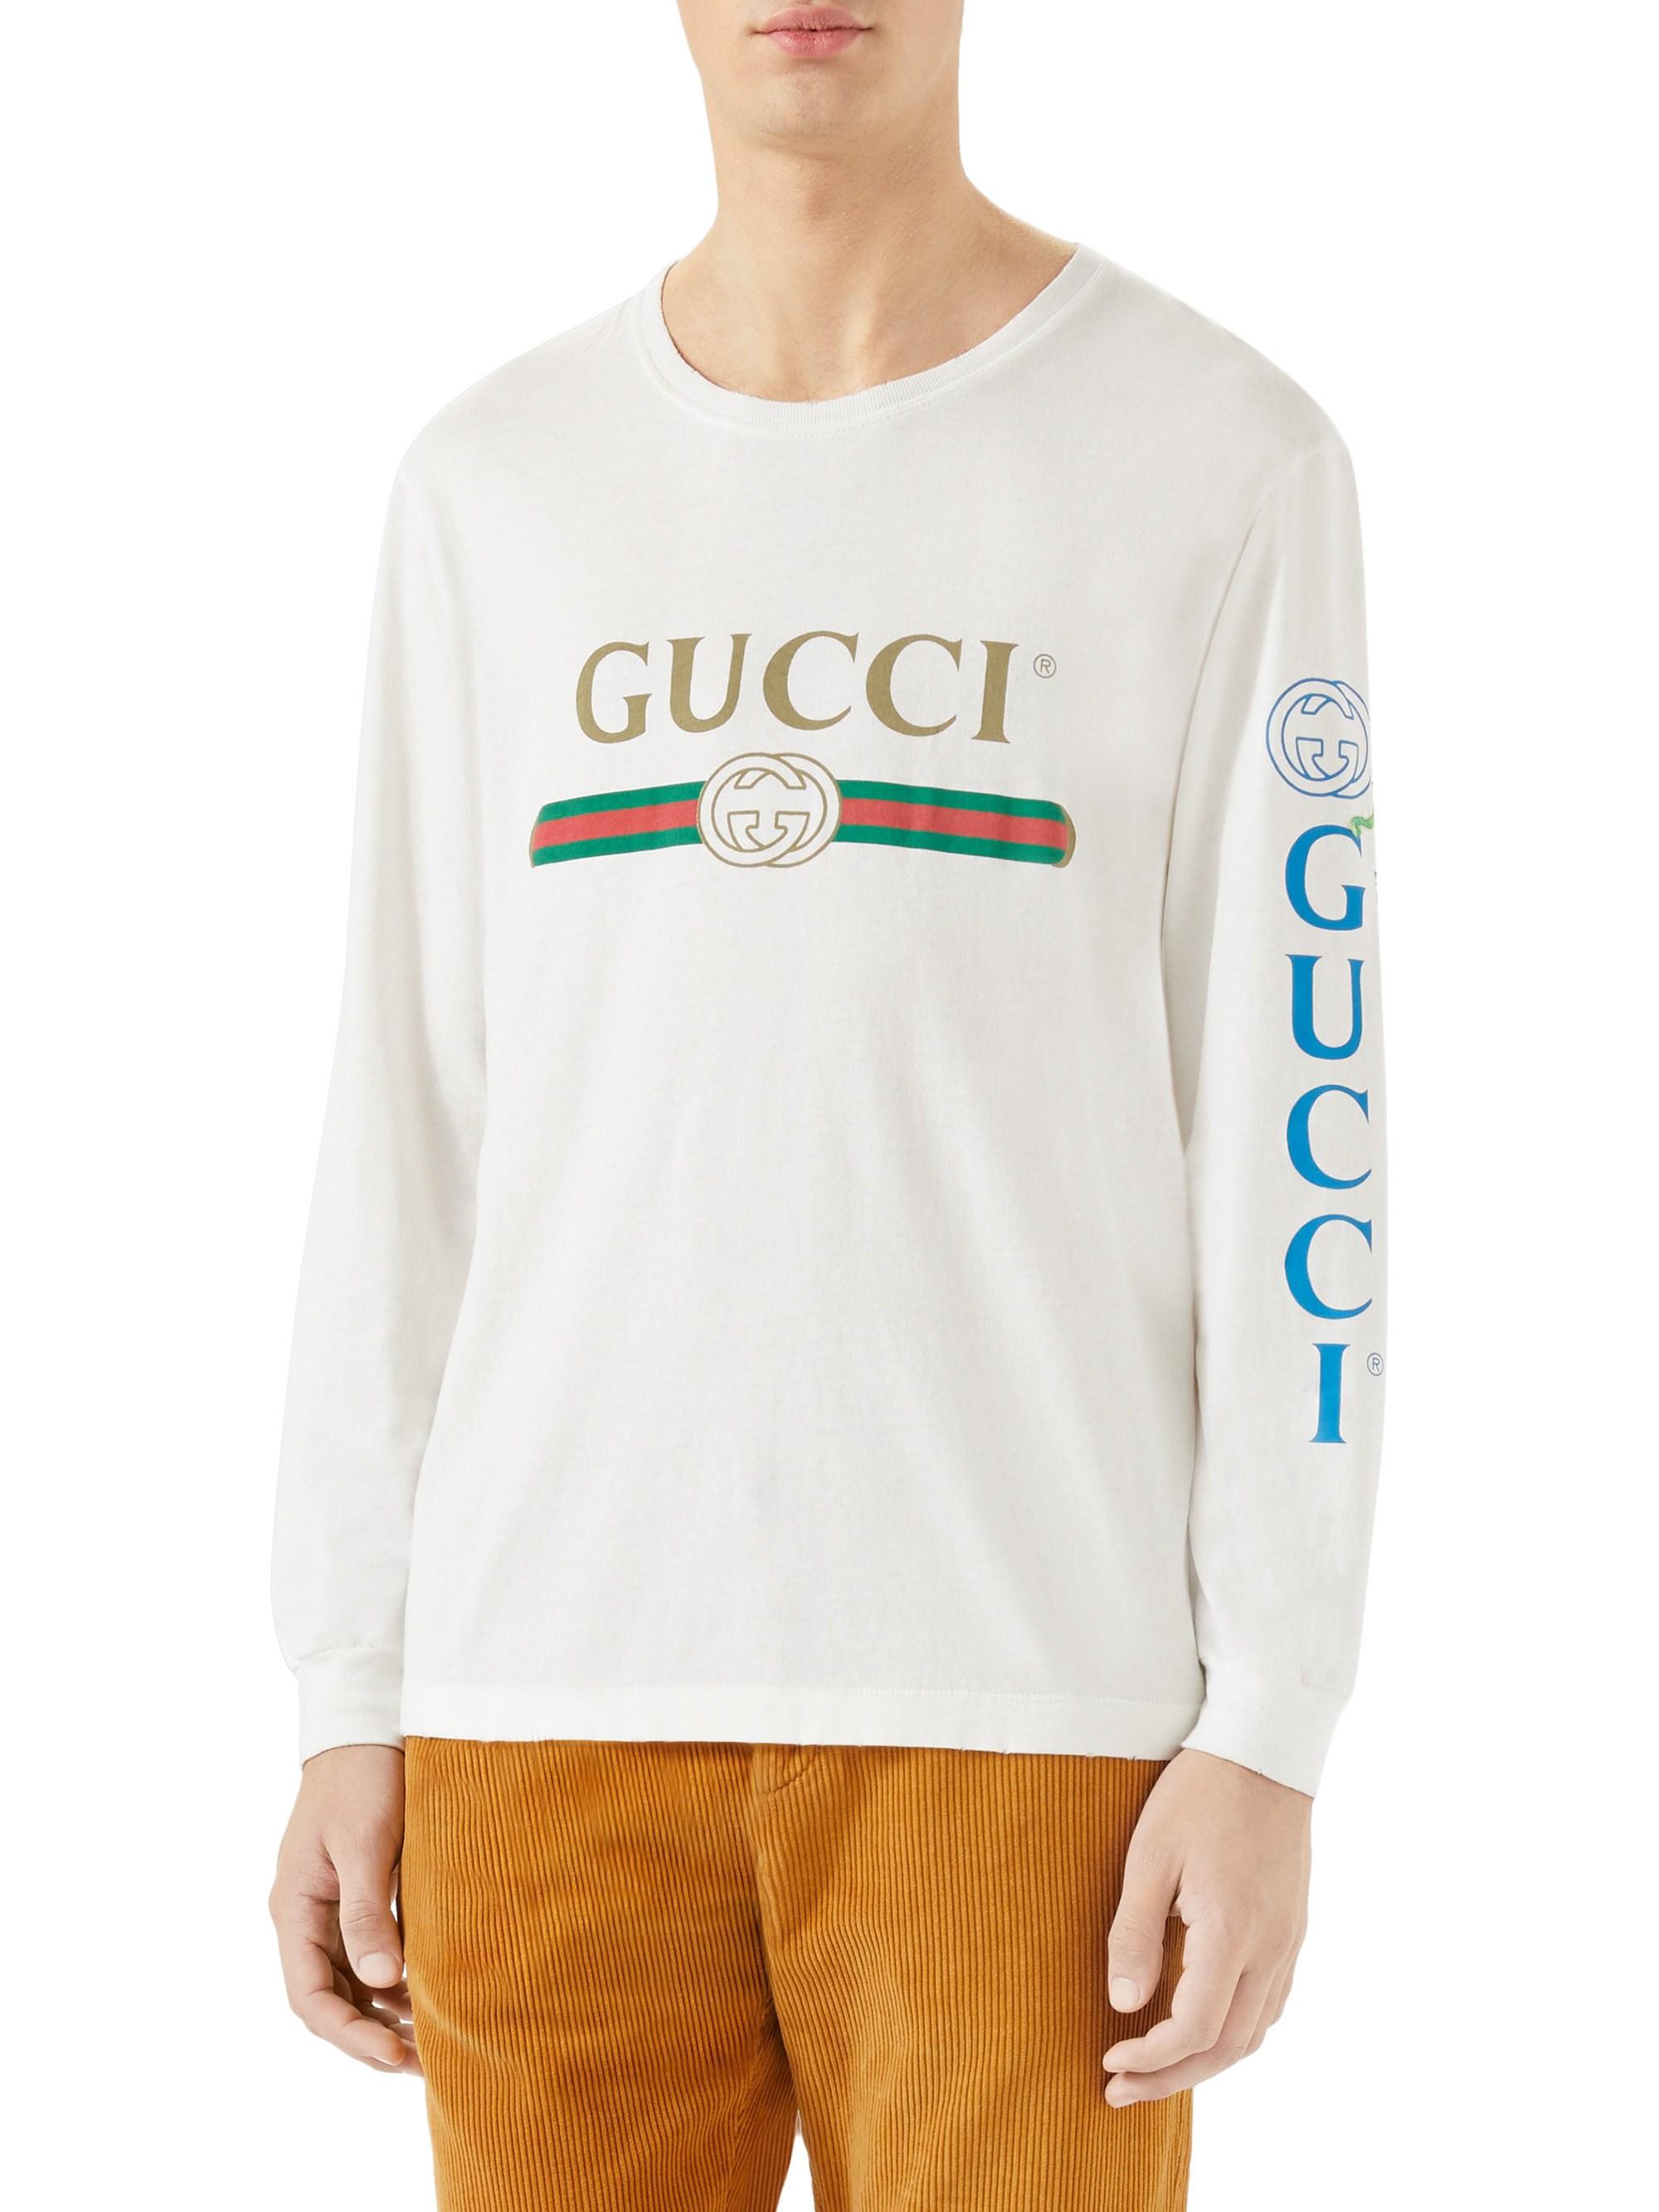 gucci long sleeve shirt